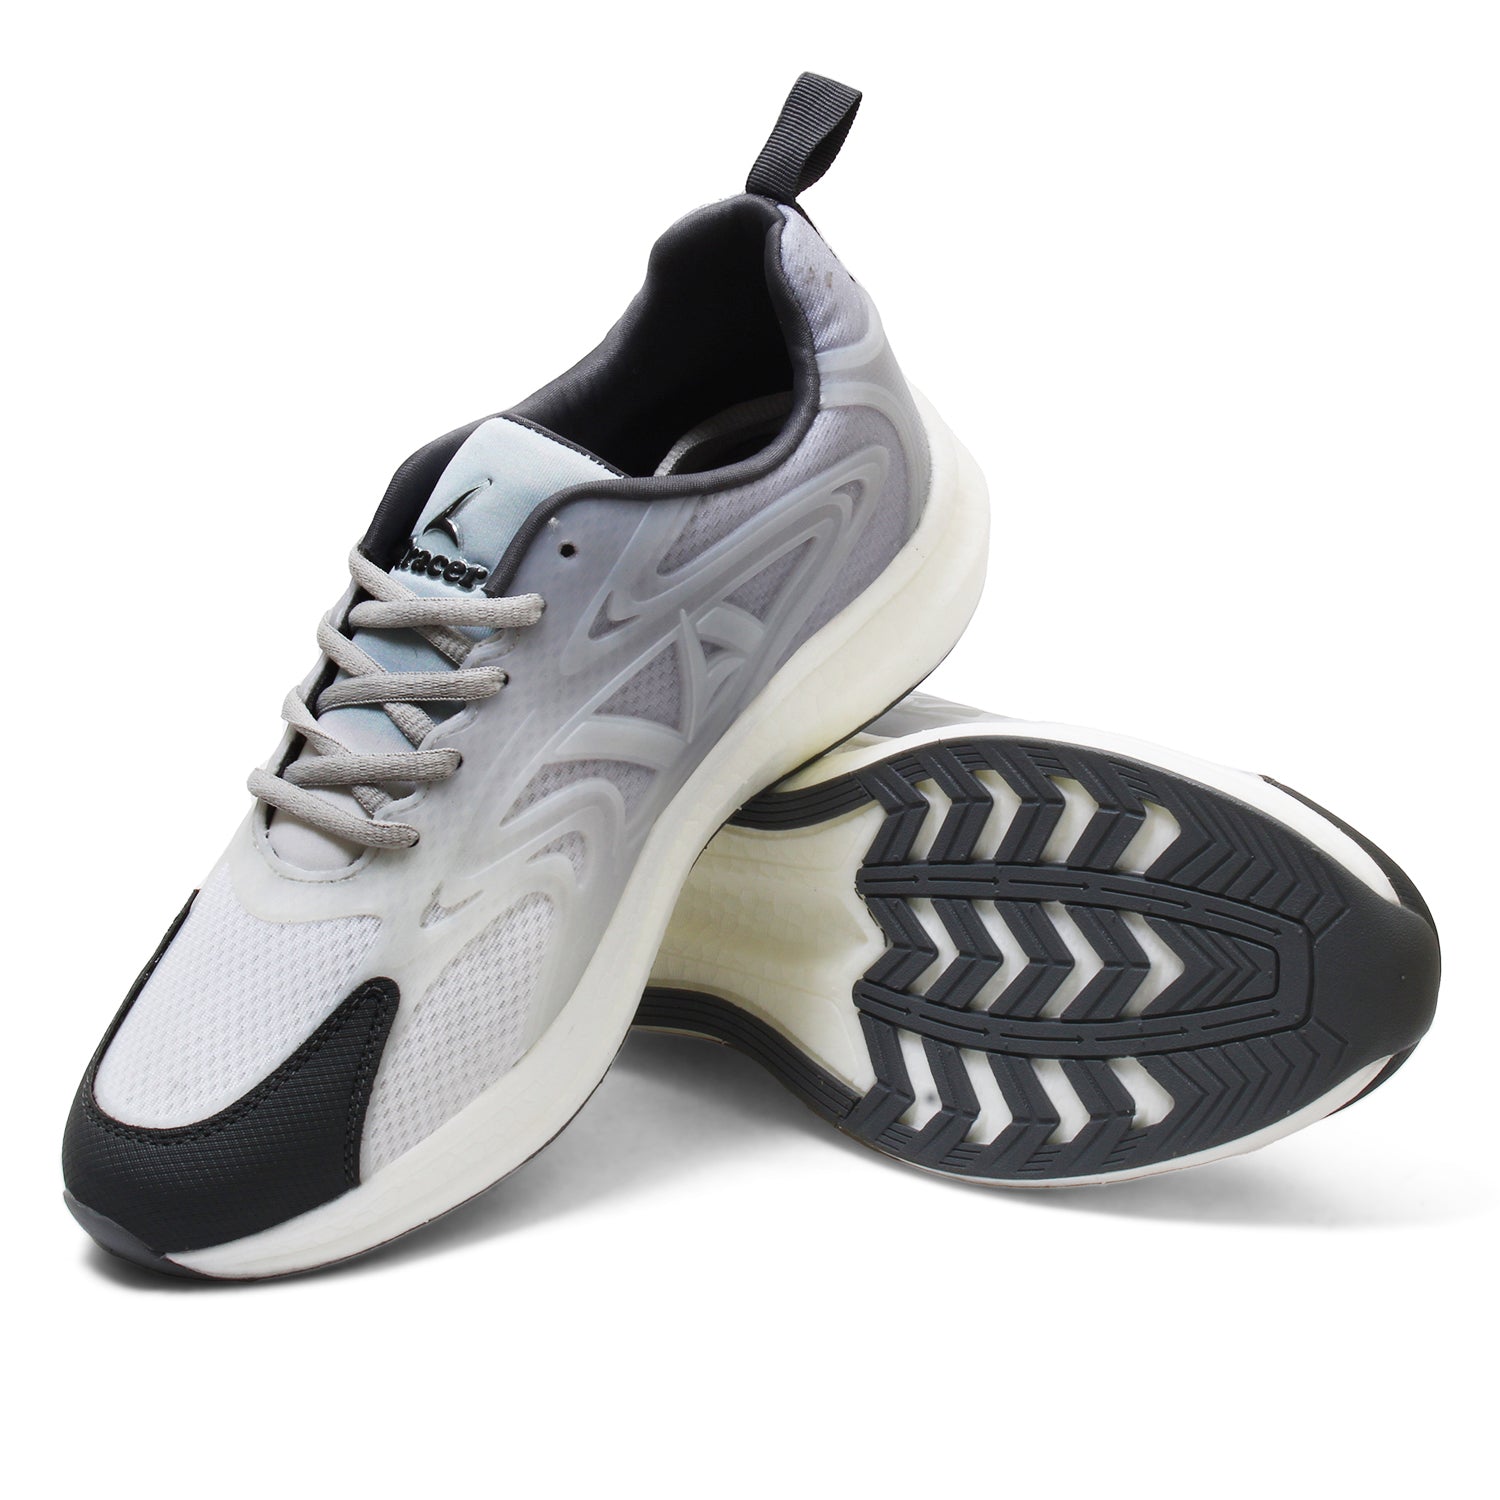 White Sneakers | Shop adidas White Sneakers Online - adidas India